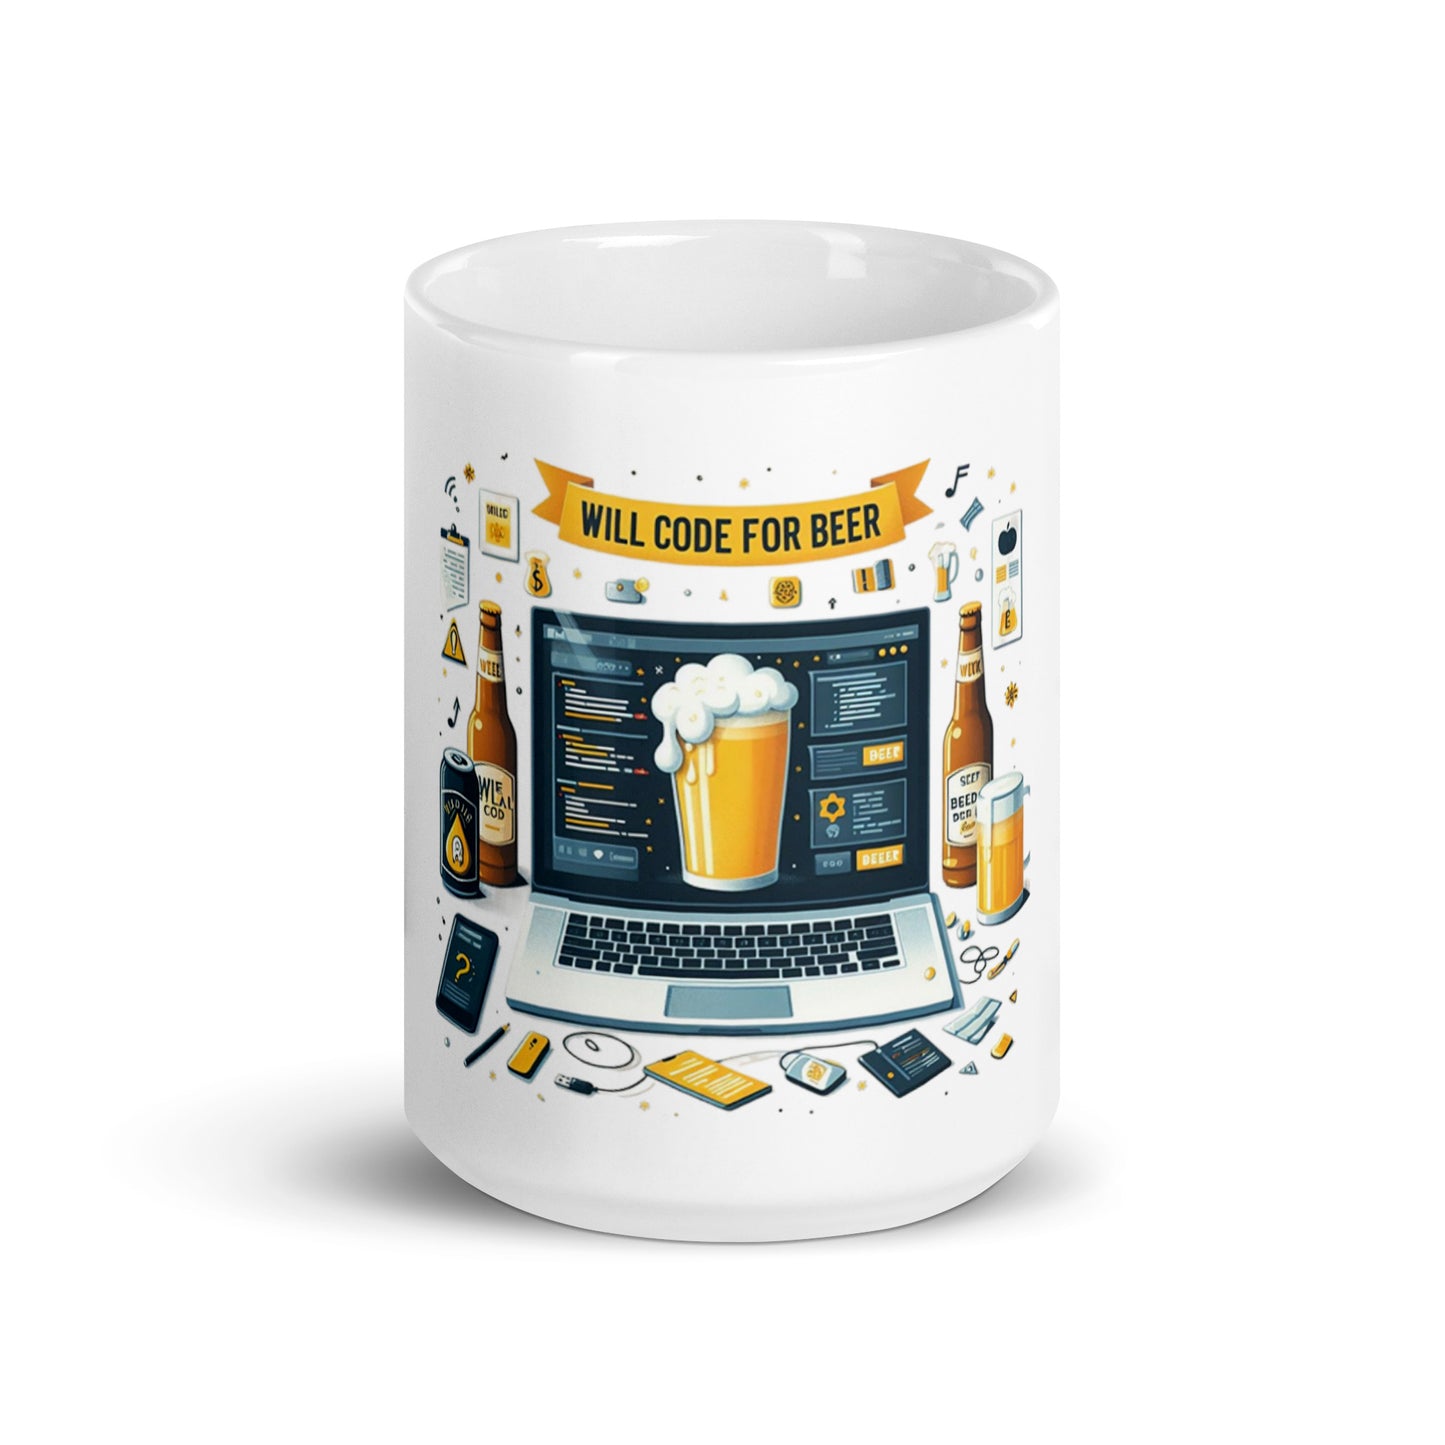 Code For Beer mug